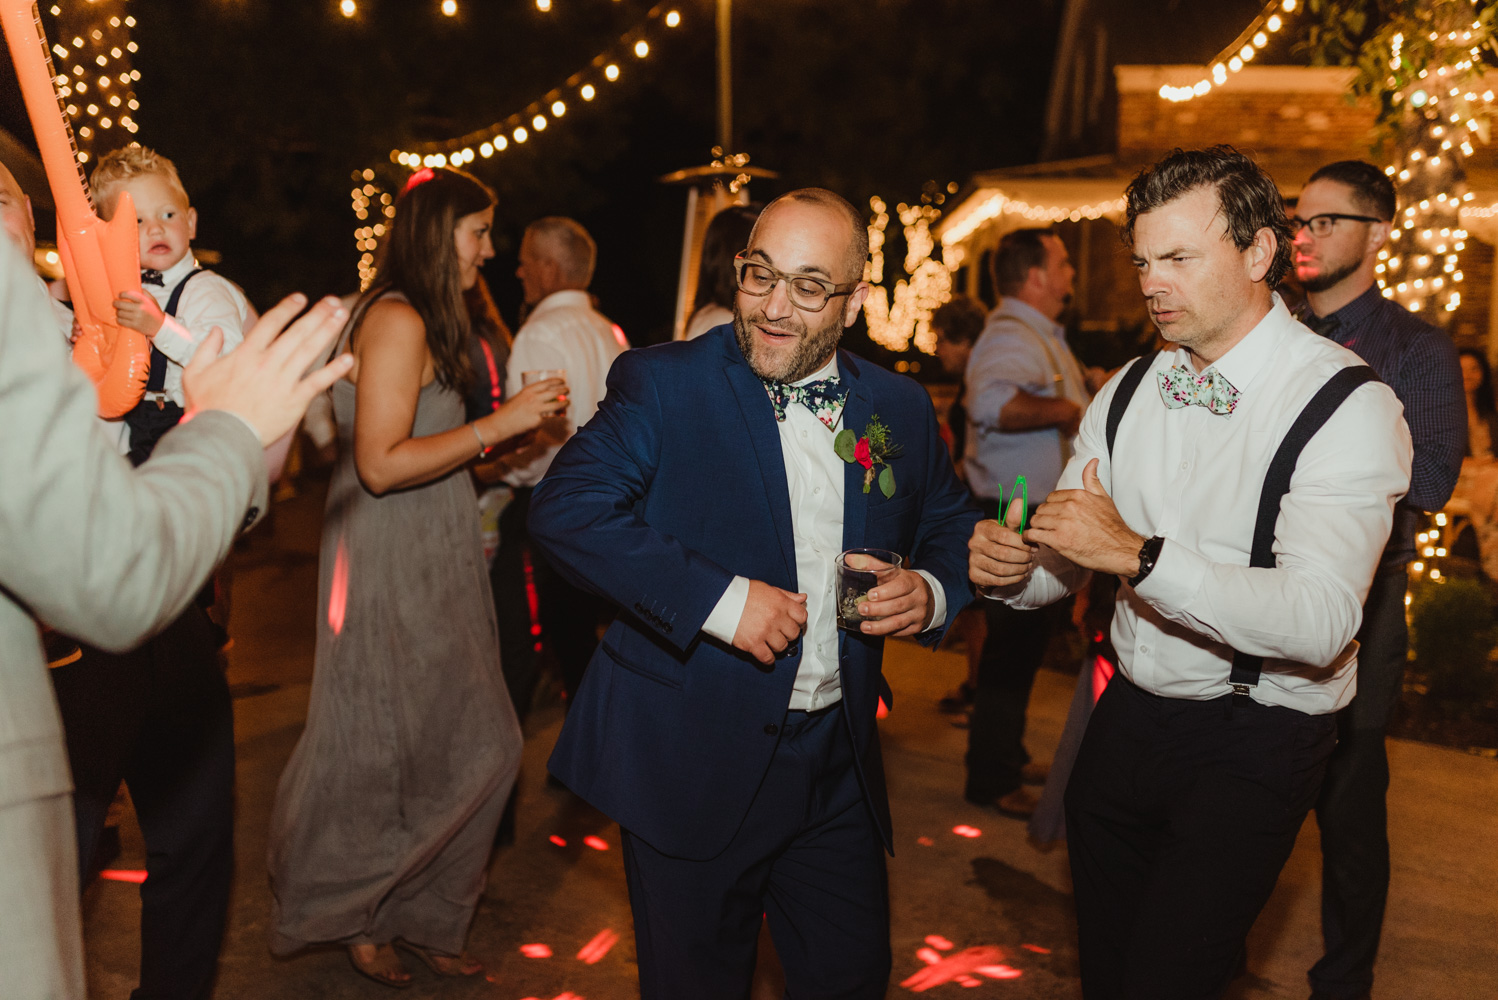 Twenty Mile House Wedding Photographer, photo of groom's best man dancing